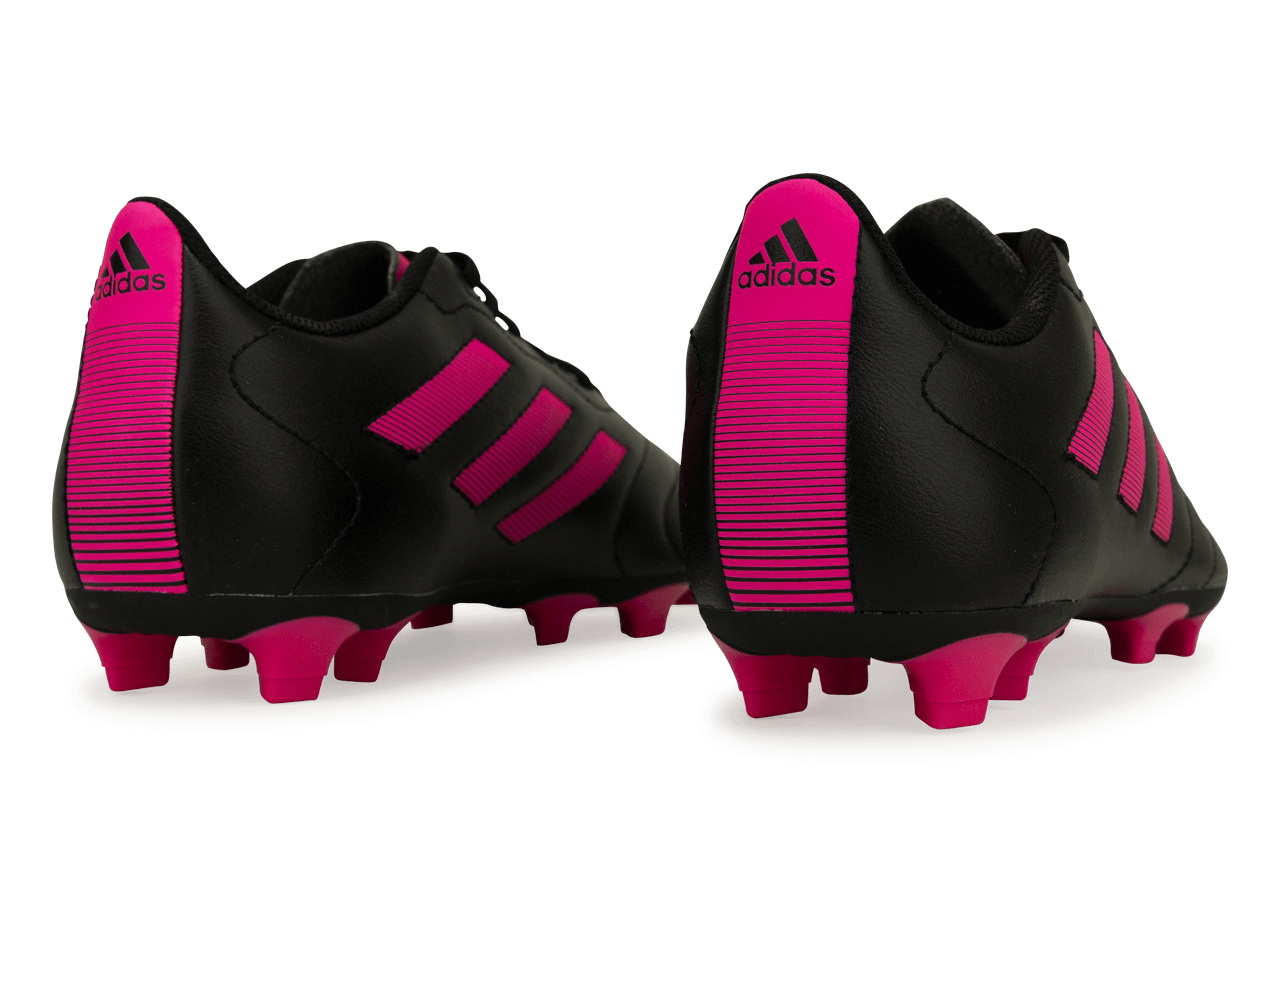 adidas Kids Goletto VIII FG Black/Pink Rear